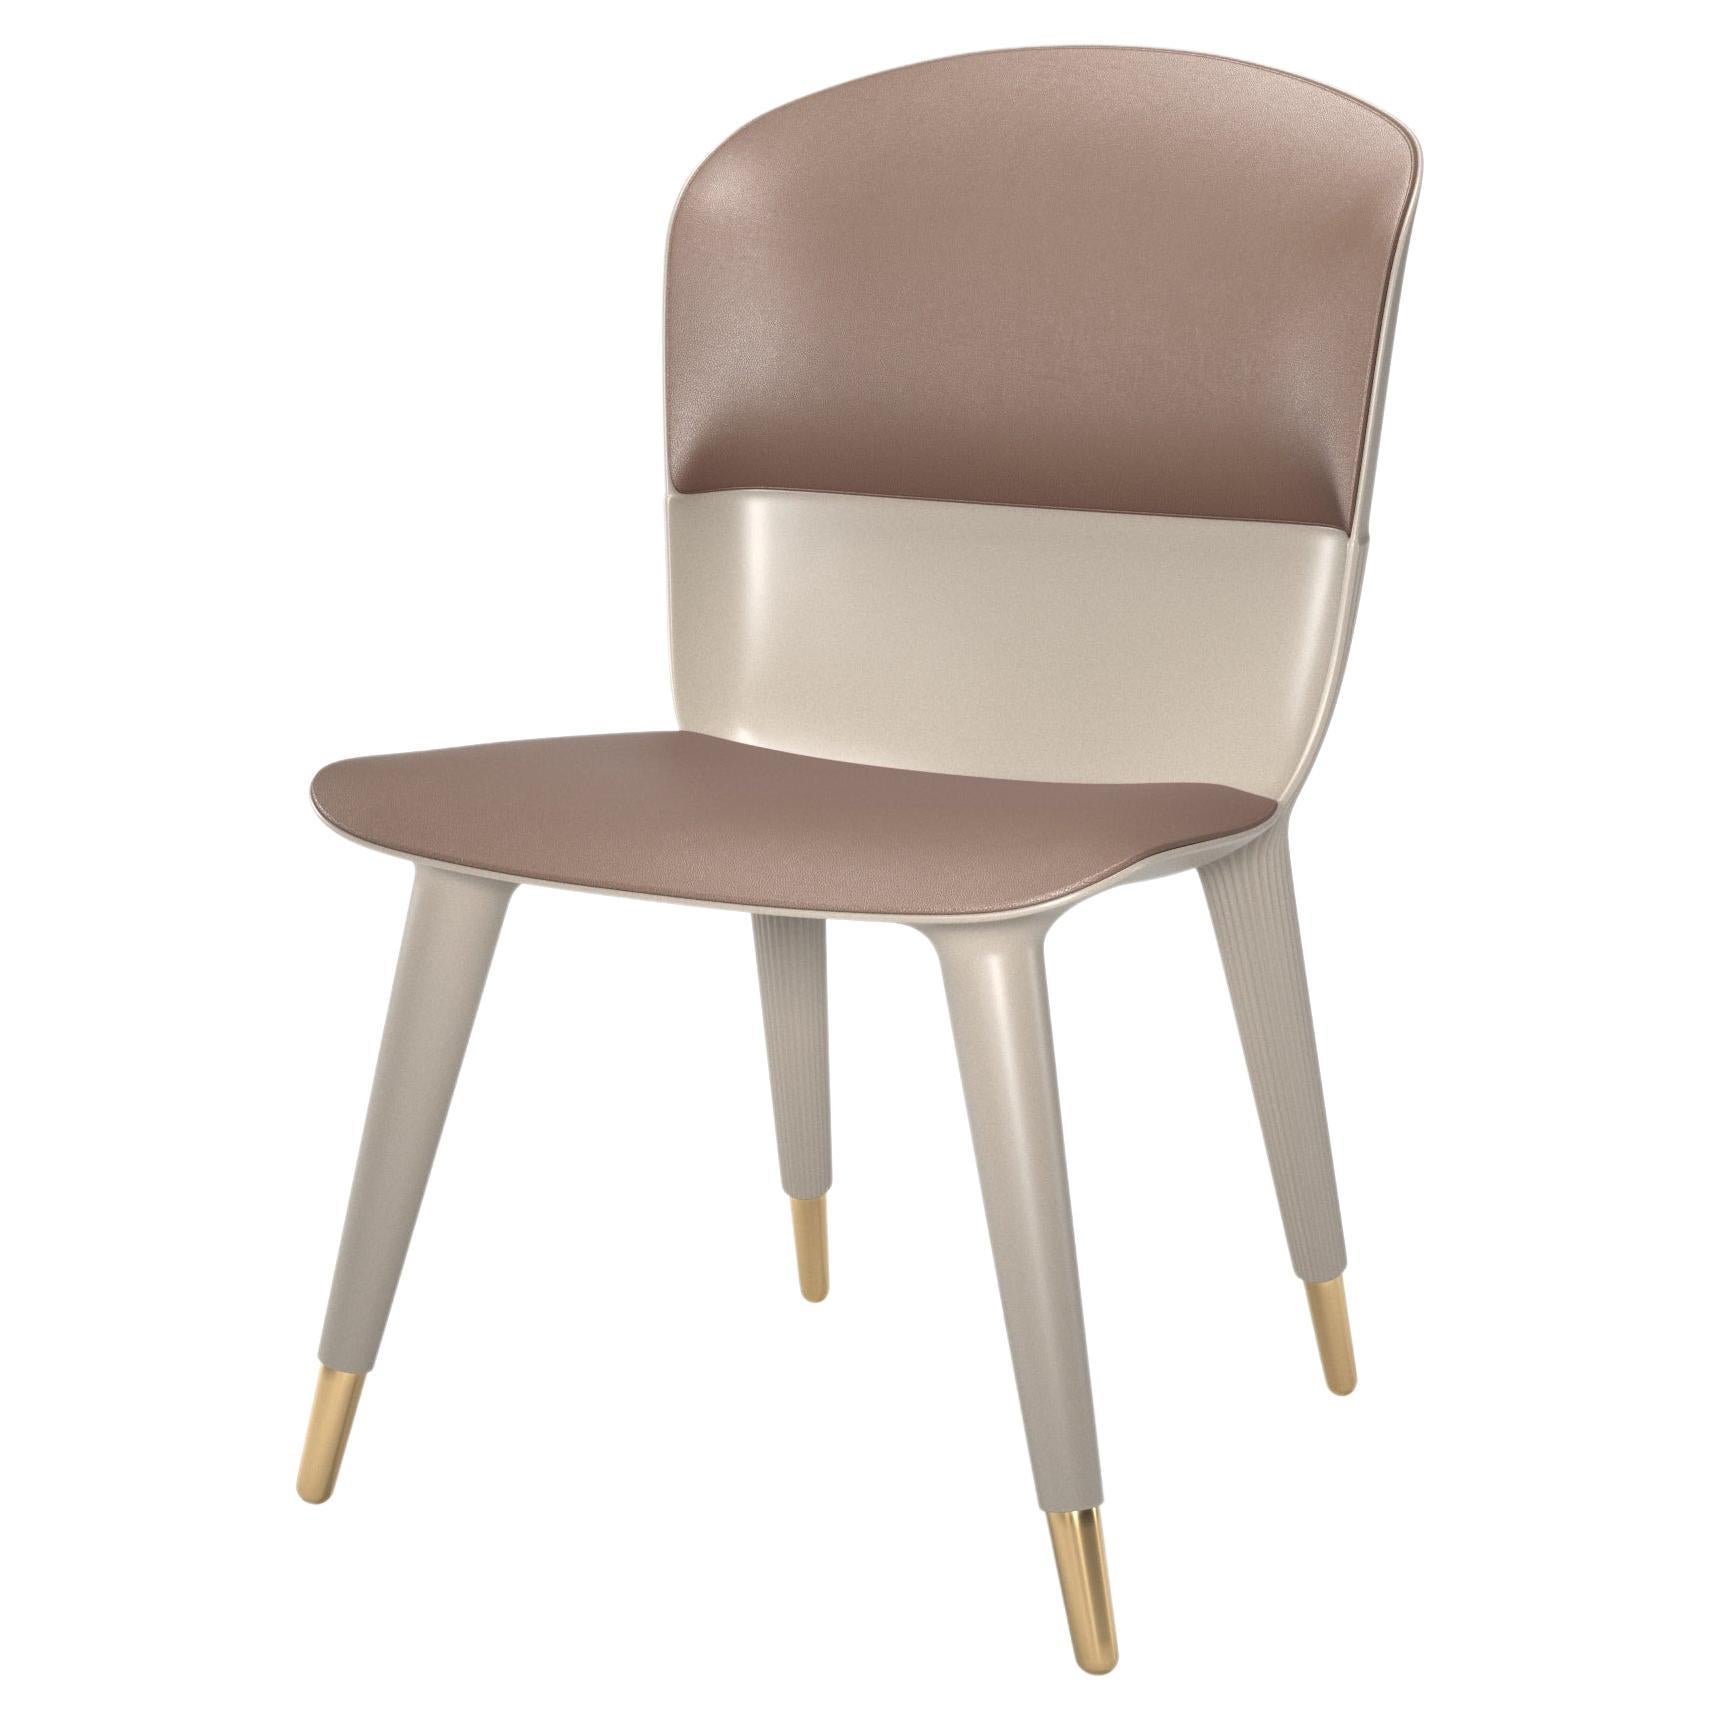 The Moderns Dining Chair with brown Leather (chaise de salle à manger moderne pour l'extérieur) 